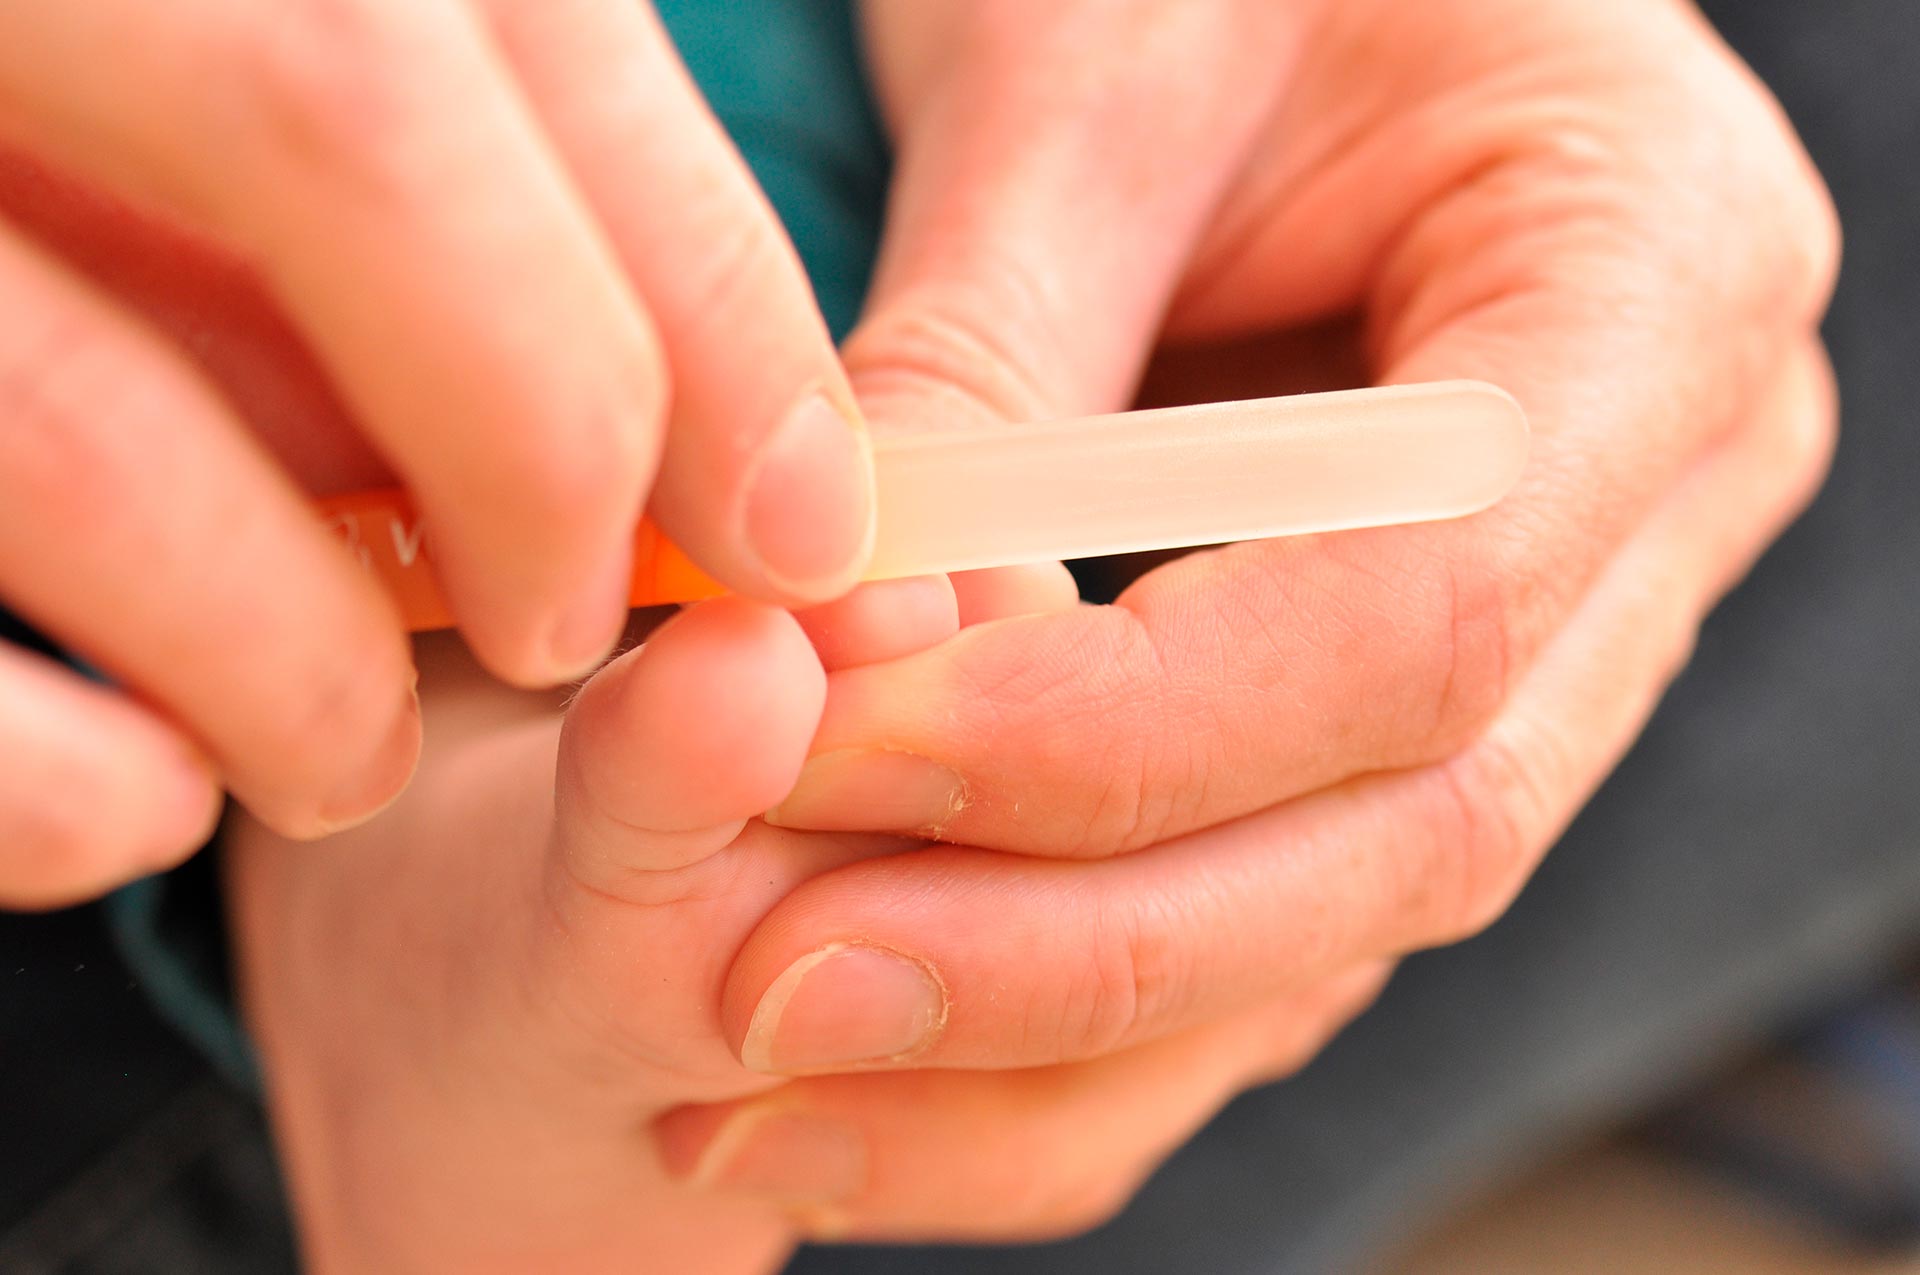 Third slide - baby having toe nails filed